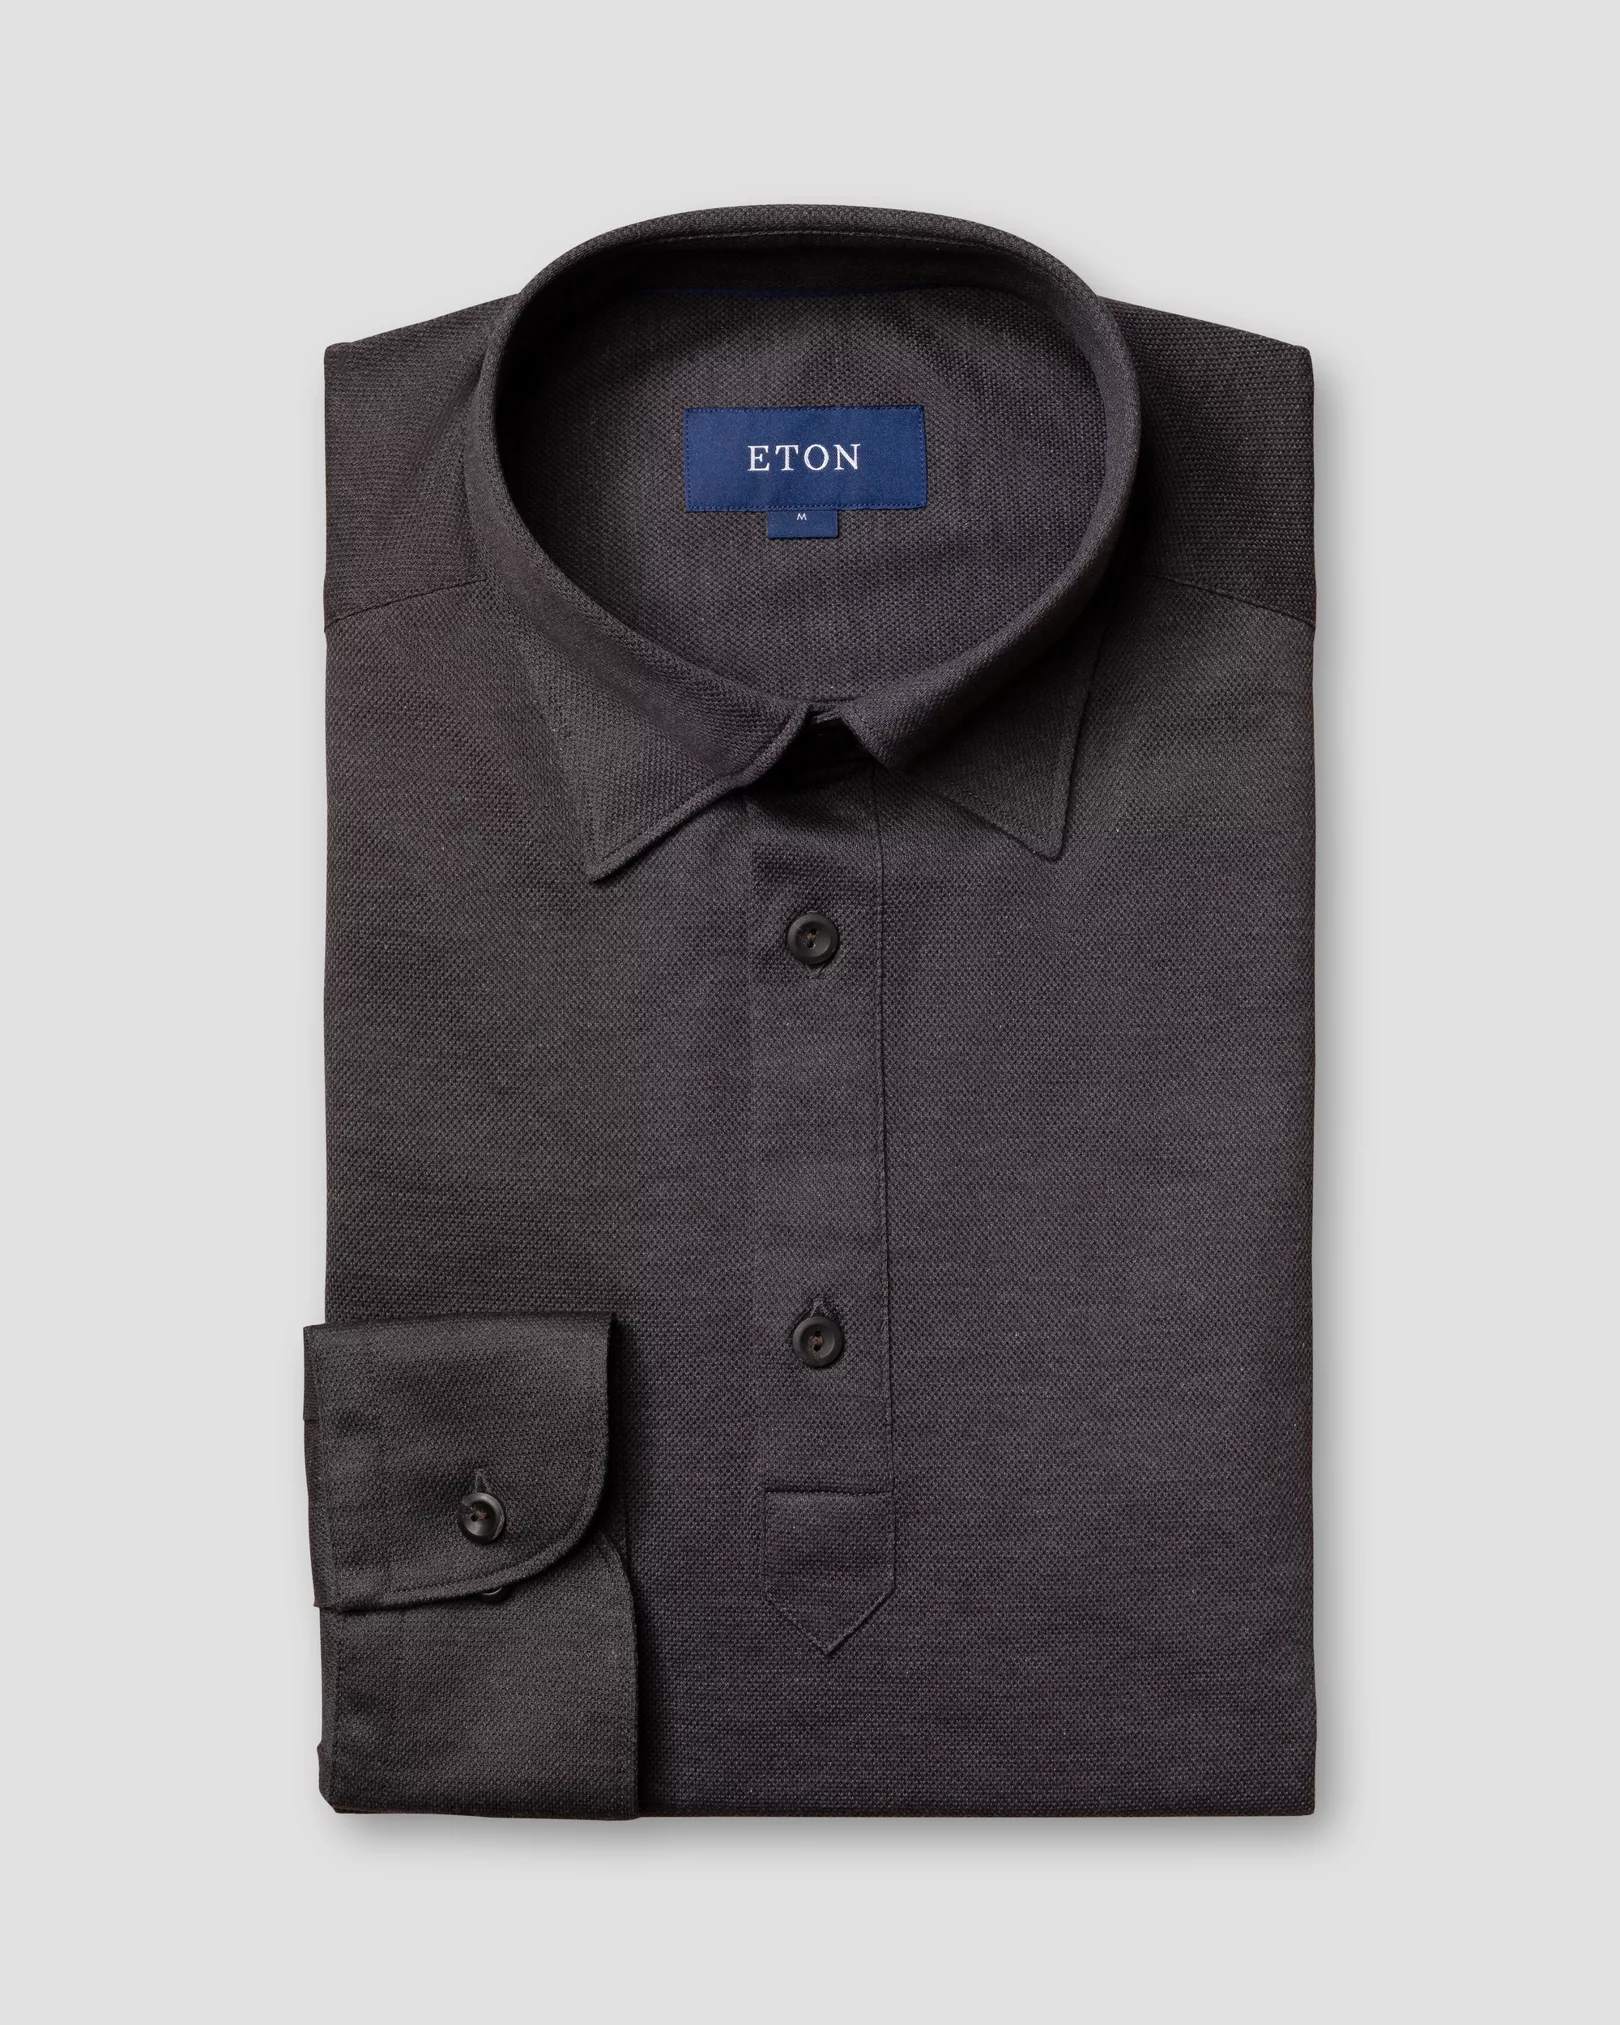 Eton - dark grey polo shirt long sleeved